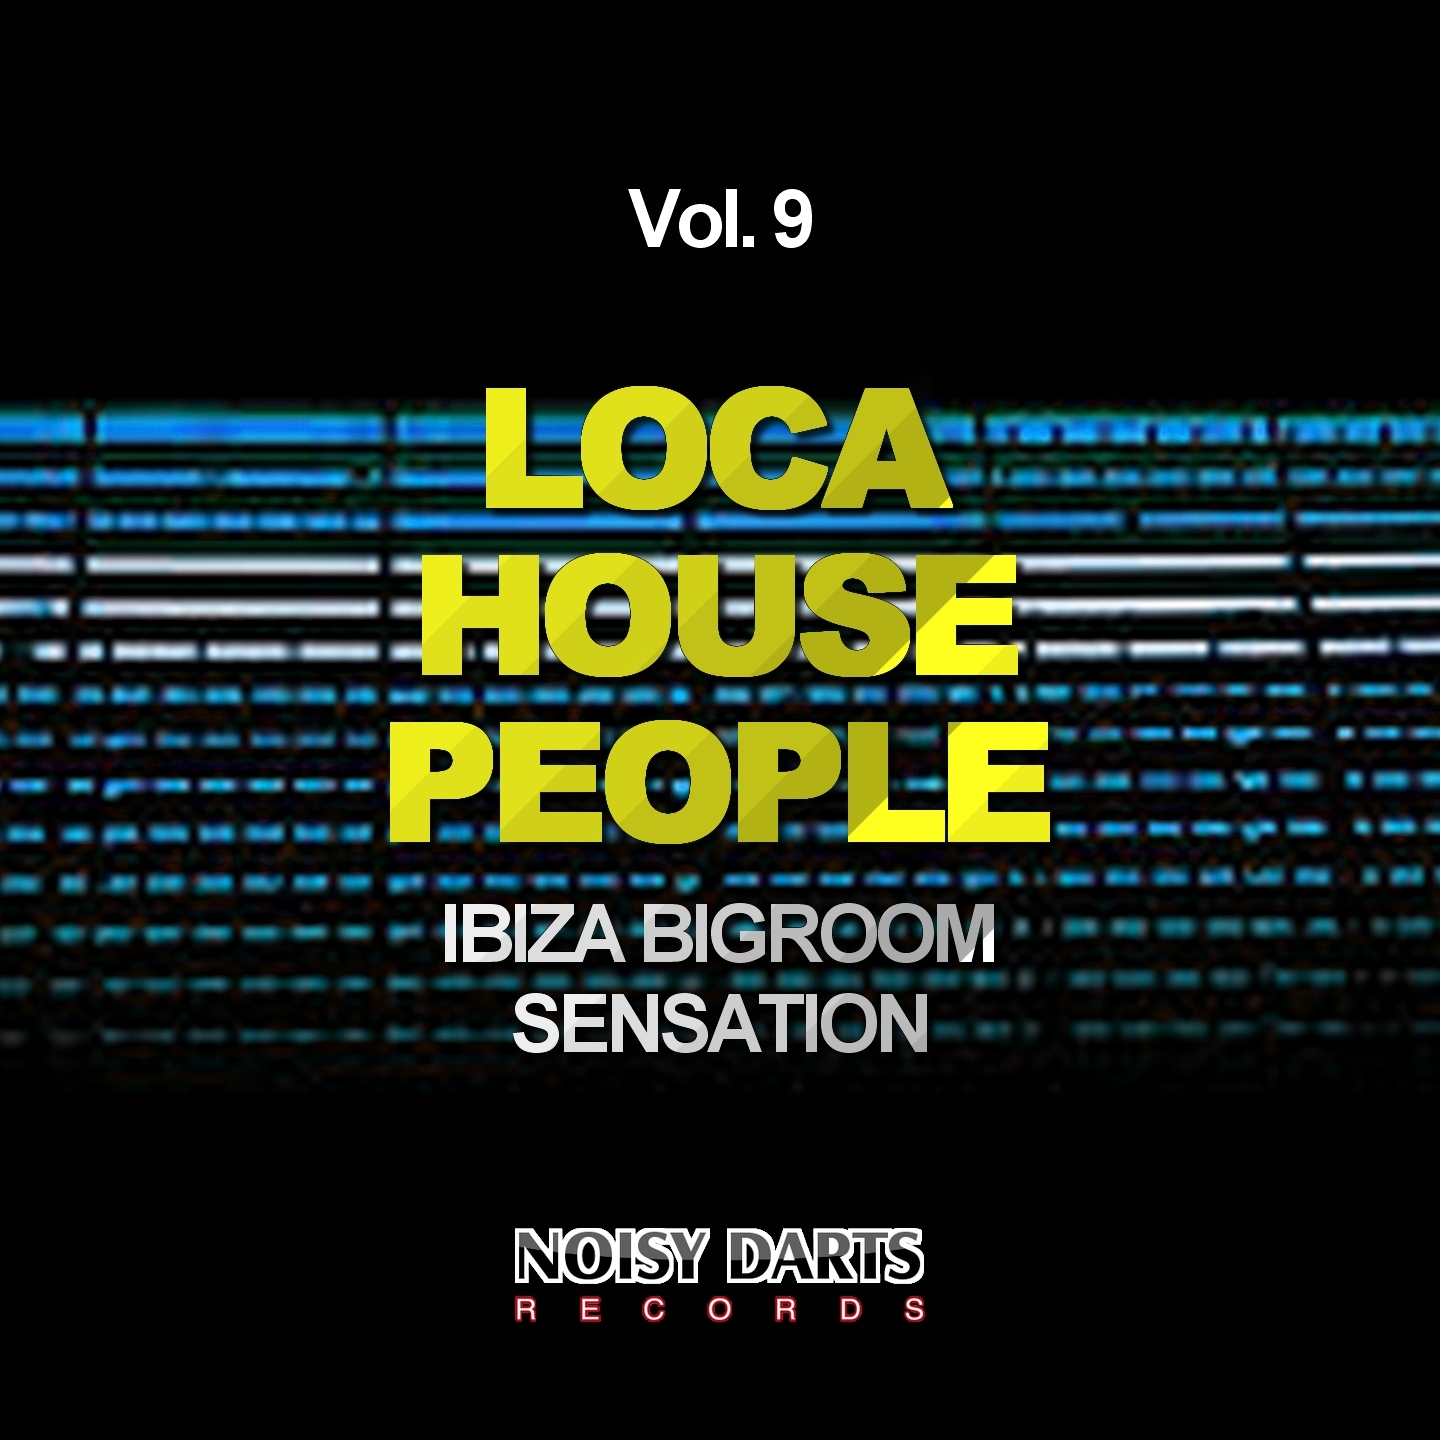 Loca House People, Vol. 9 (Ibiza Bigroom Sensation)